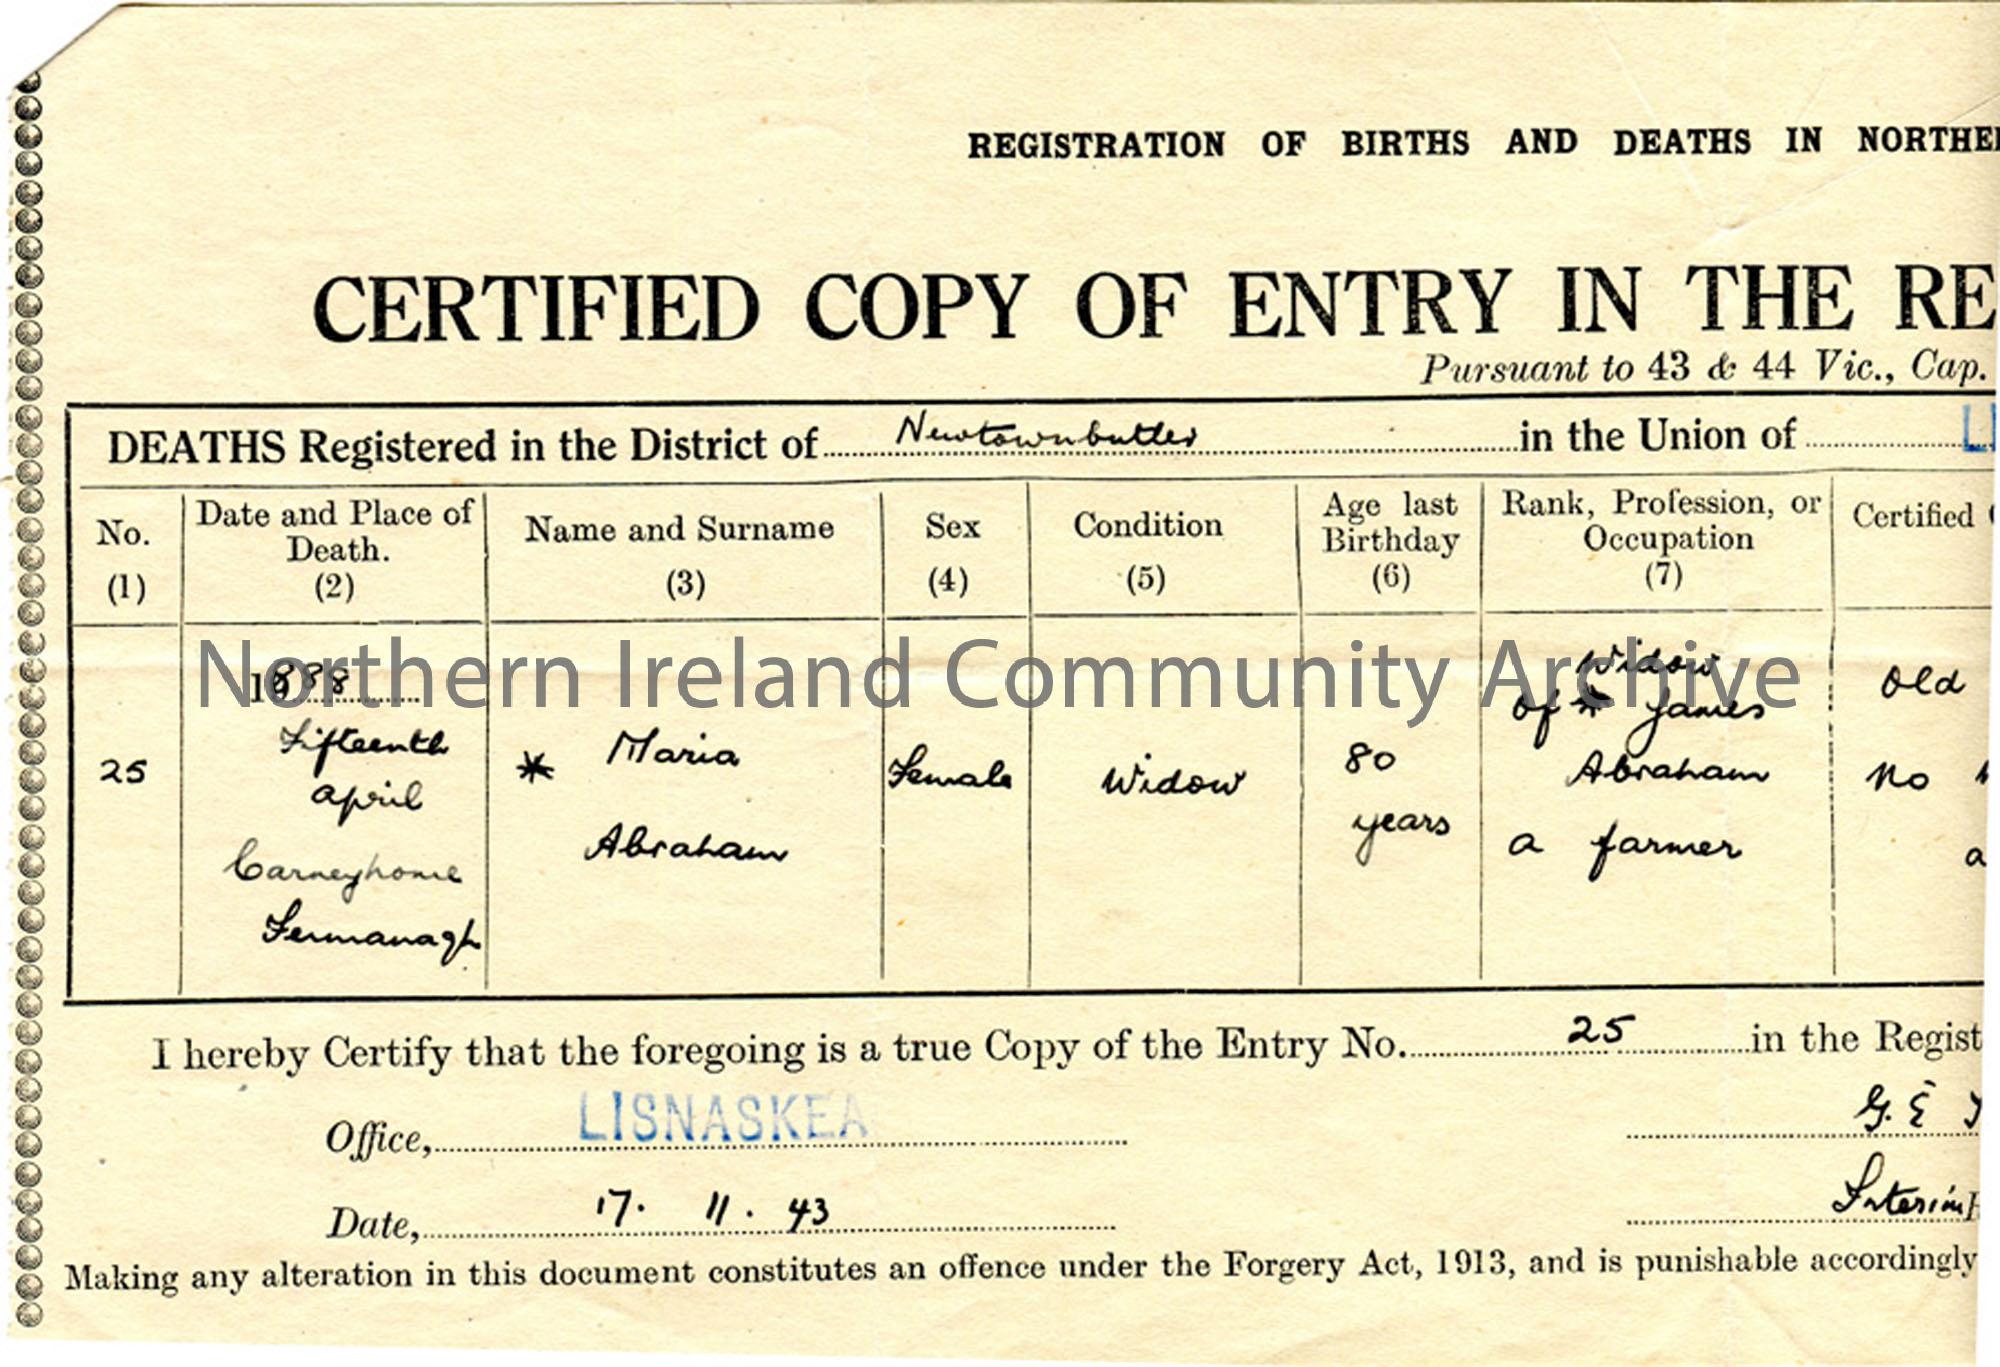 Death Certificate of Maria Abraham, Fermanagh